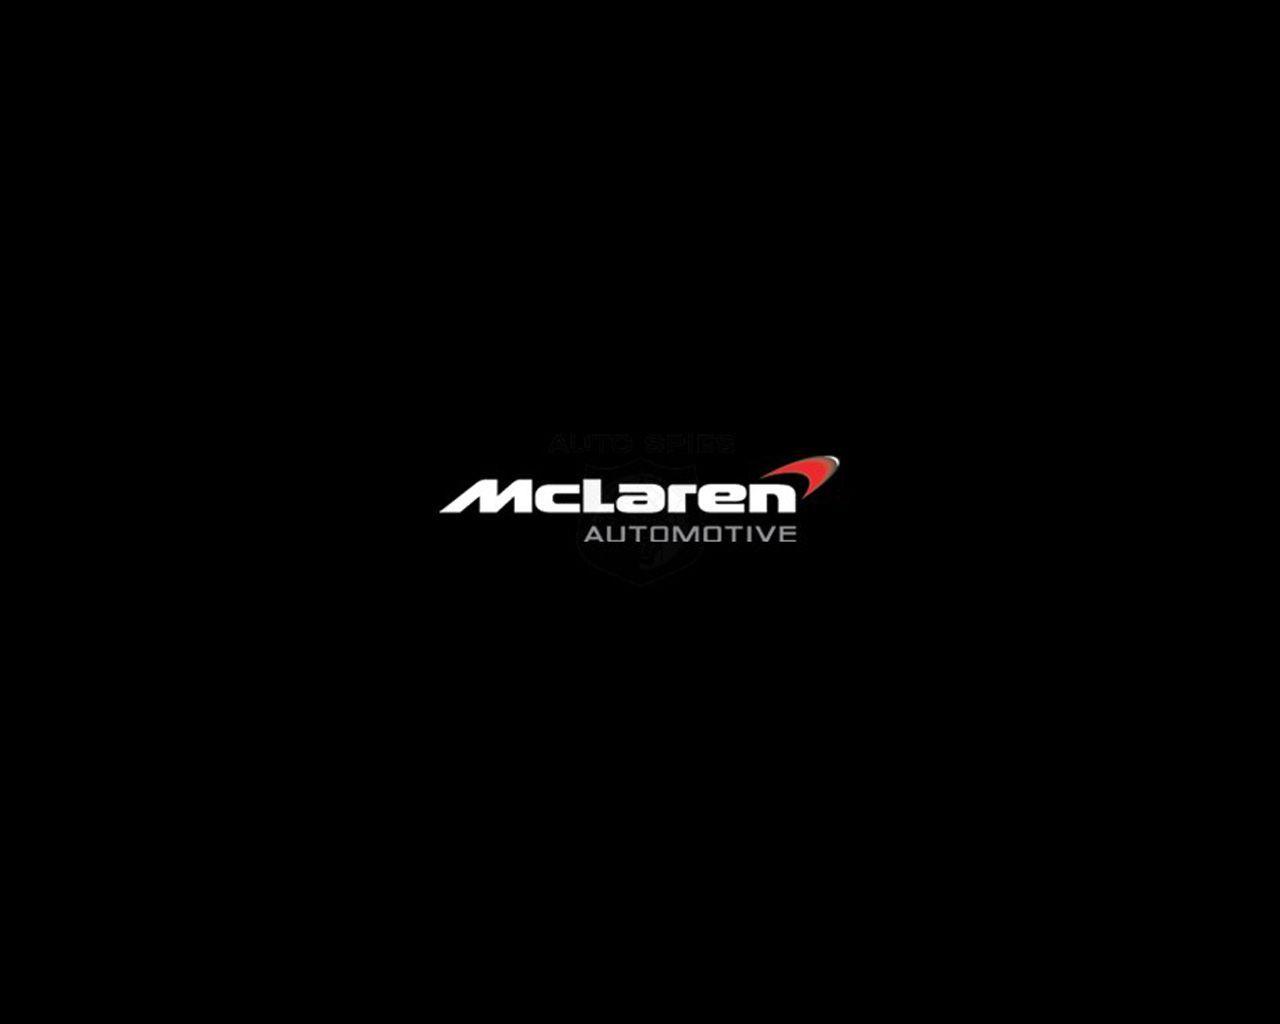 Mclaren Logo Wallpapers Top Free Mclaren Logo Backgrounds Wallpaperaccess